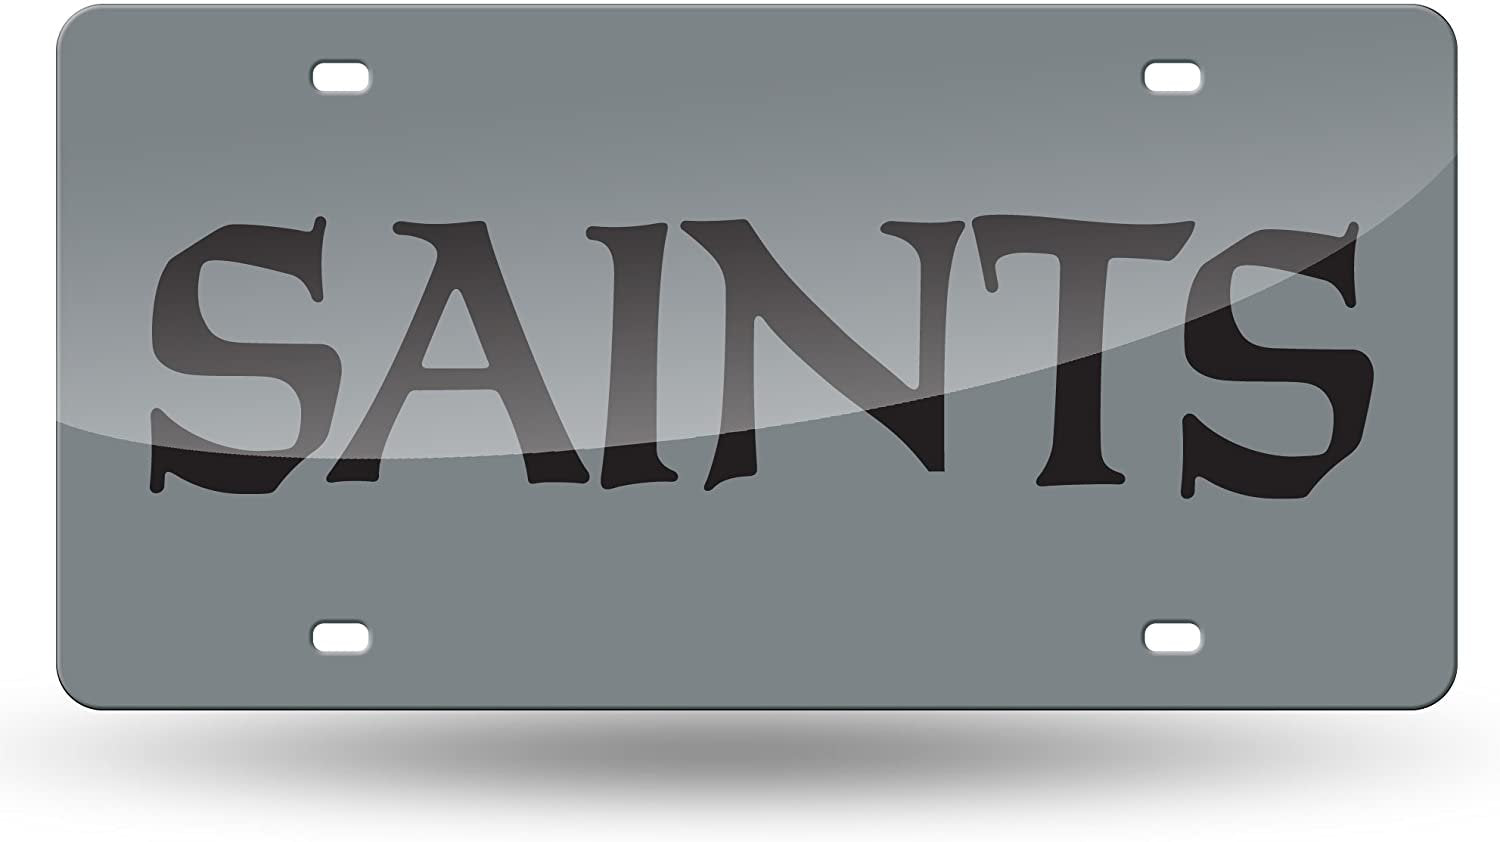 New Orleans Saints Premium Laser Cut Tag License Plate Mirrored Acrylic Inlaid Script Design 6x12 Inch